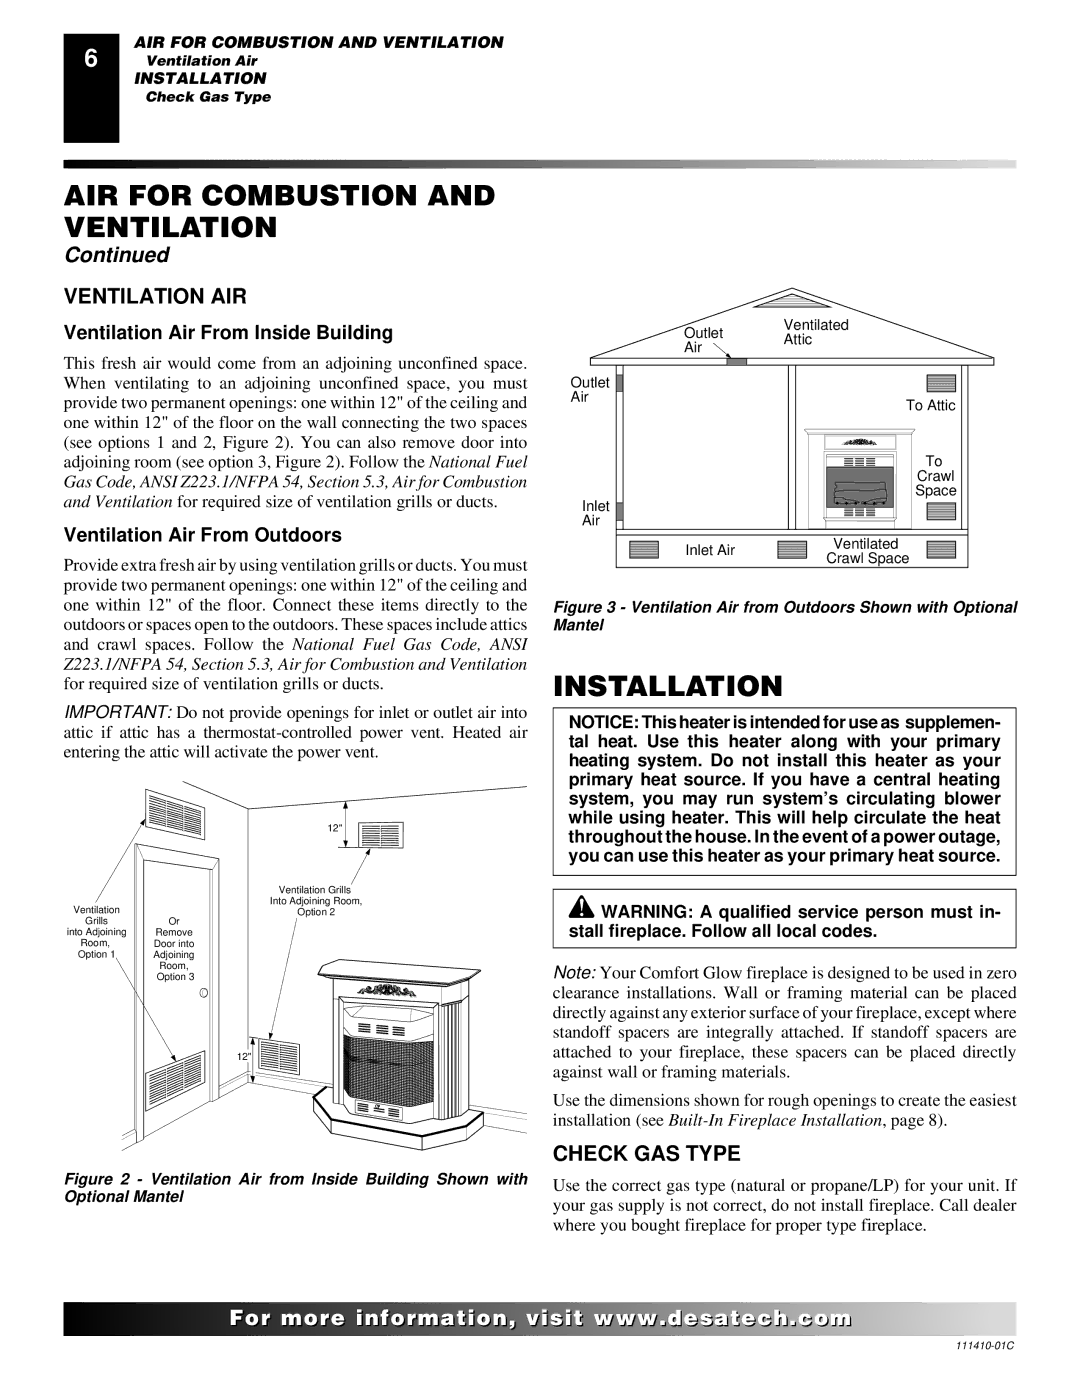 Desa CF26NT installation manual Installation, Ventilation AIR, Check GAS Type, Ventilation Air From Inside Building 